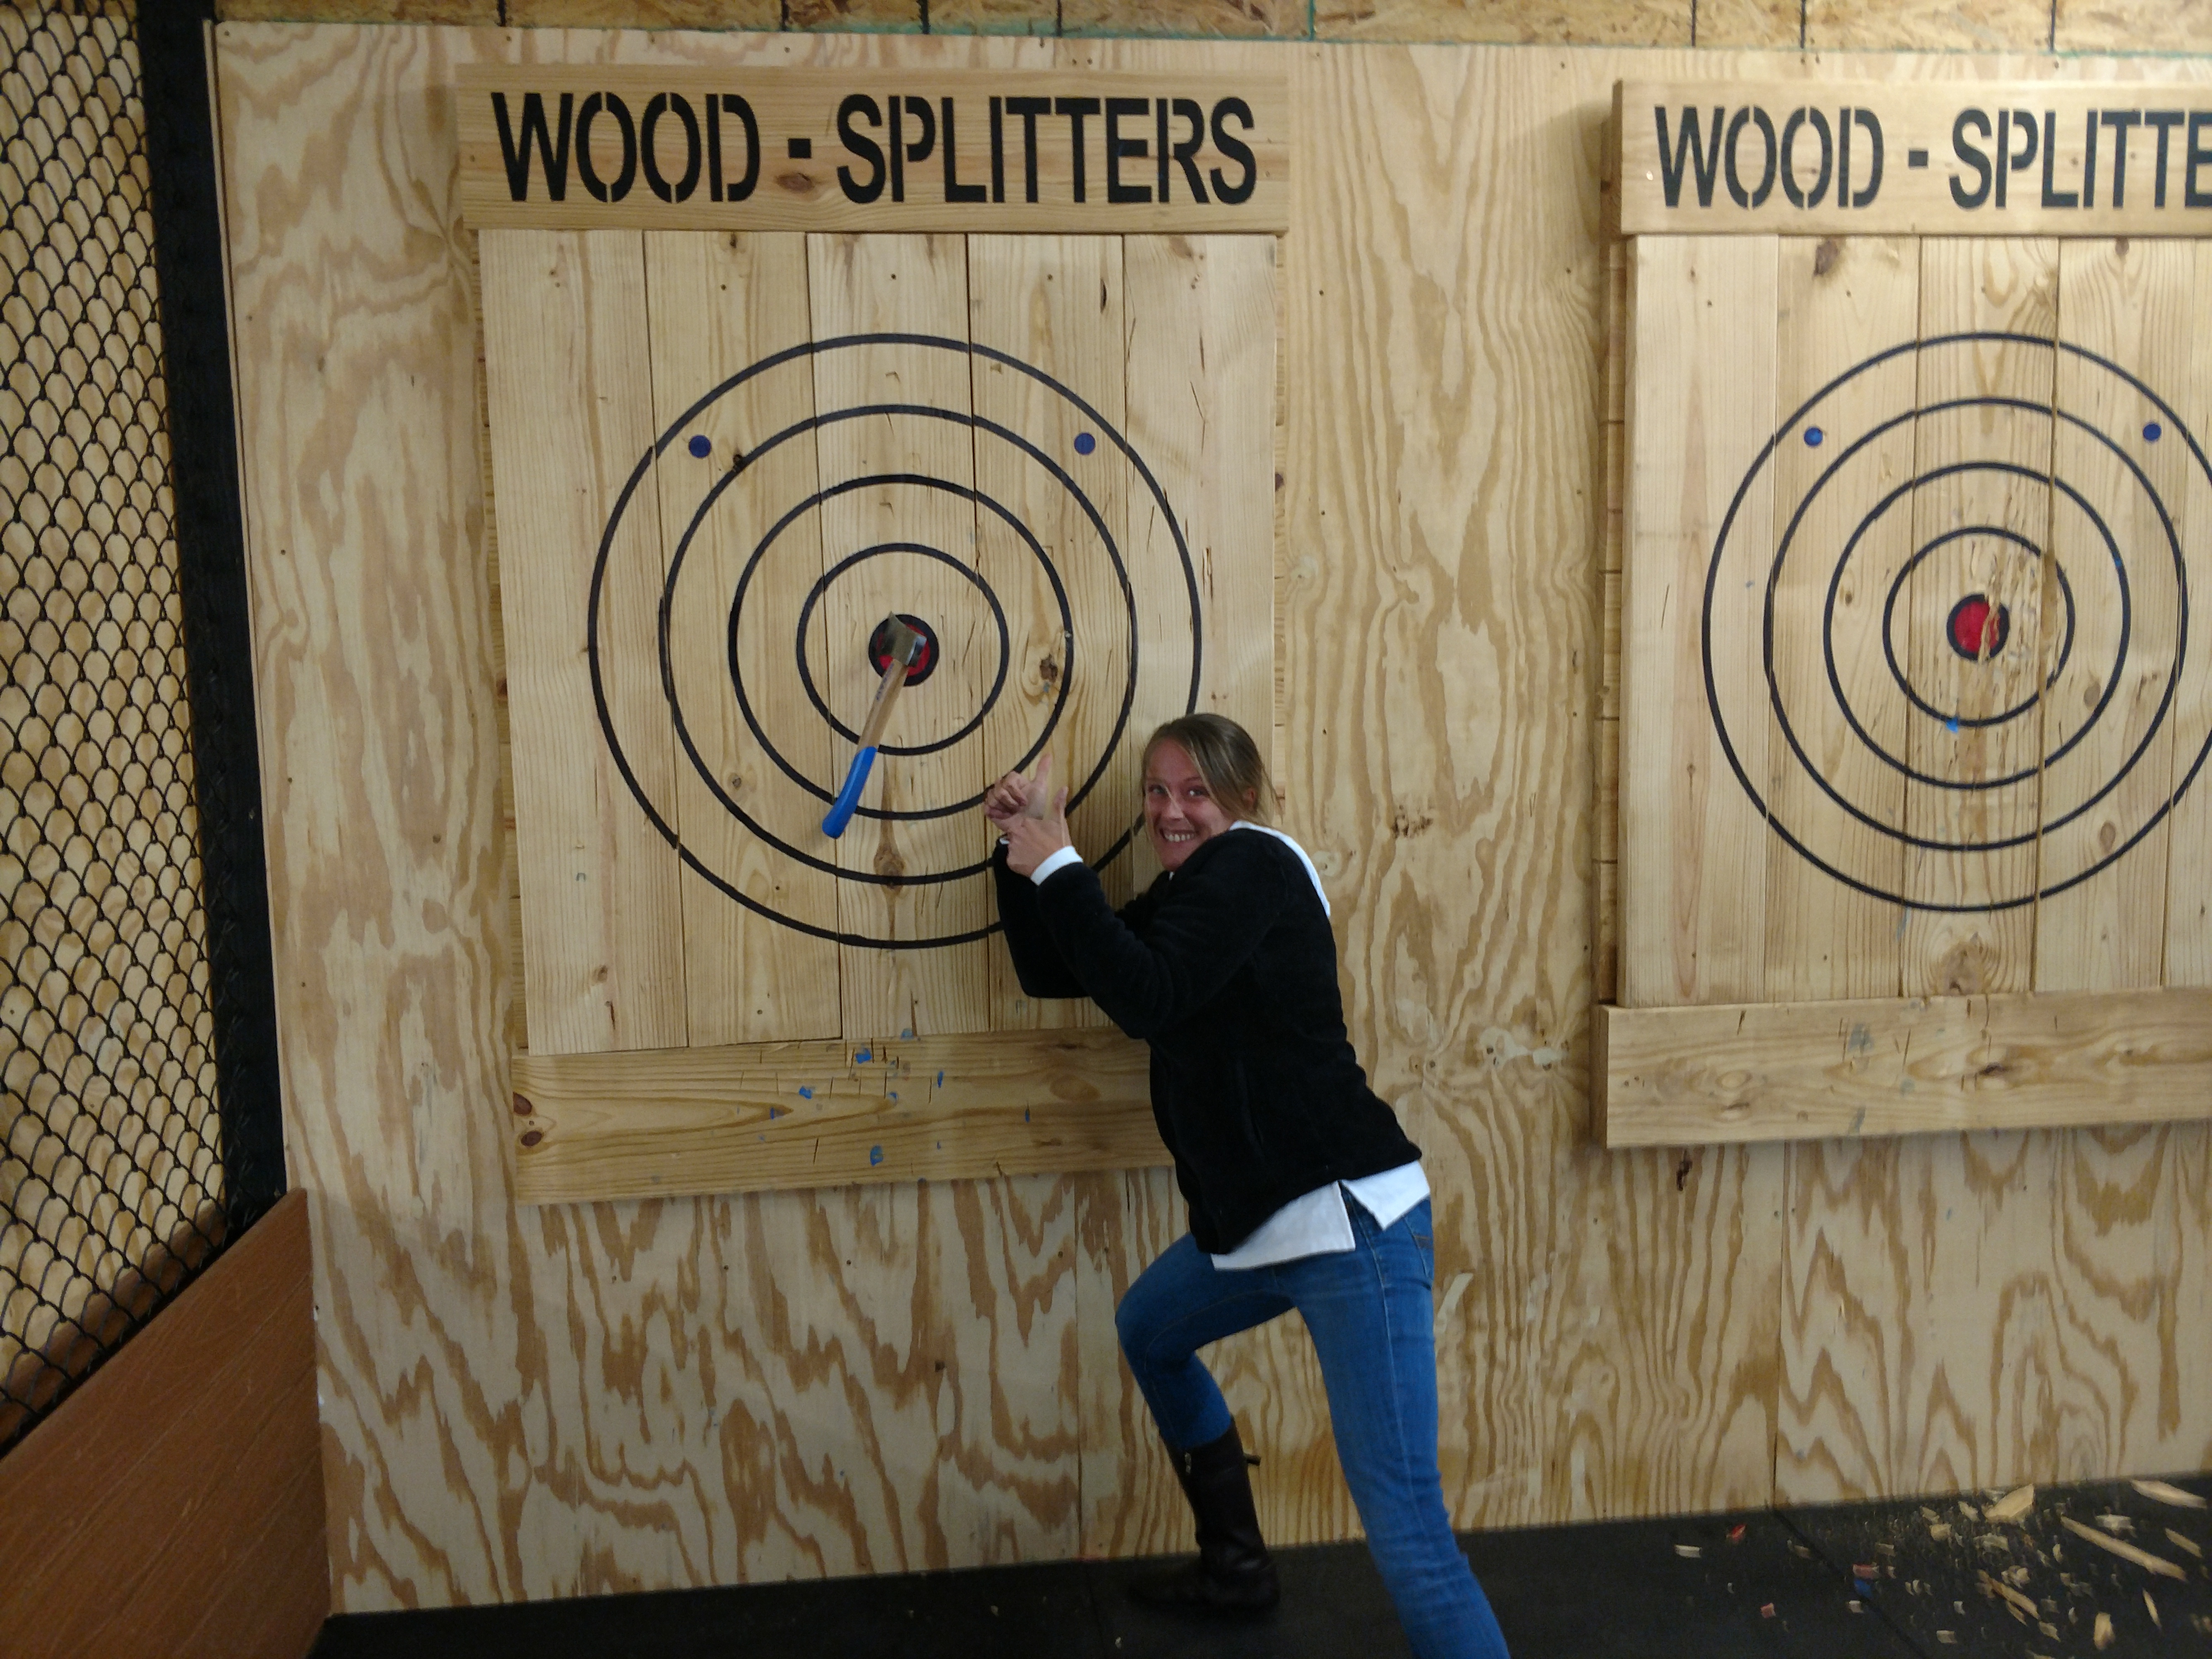 Wood-Splitters Axe Throwing Gallery Image 49